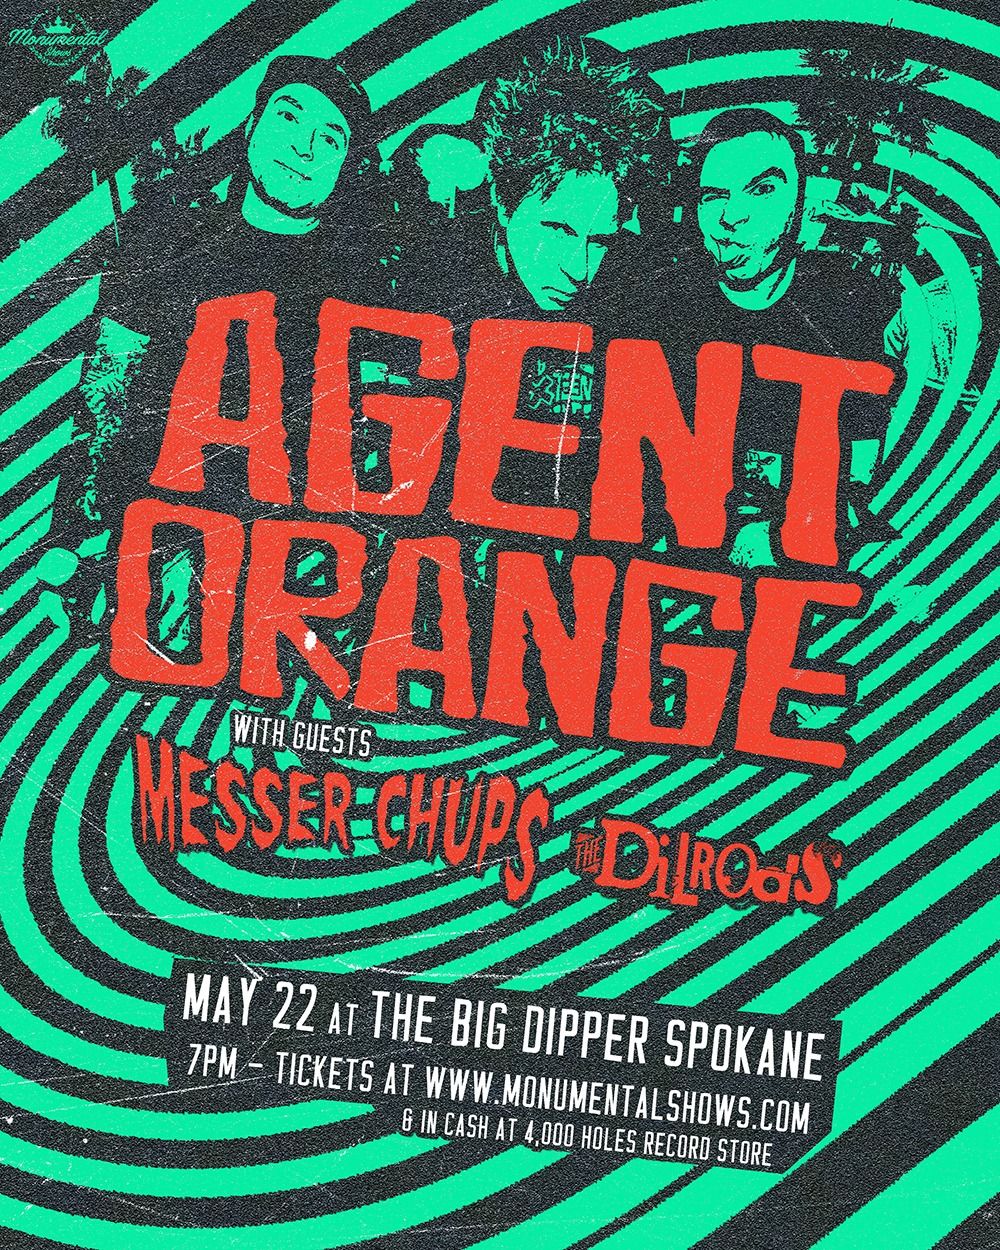 Agent Orange at The Big Dipper Spokane